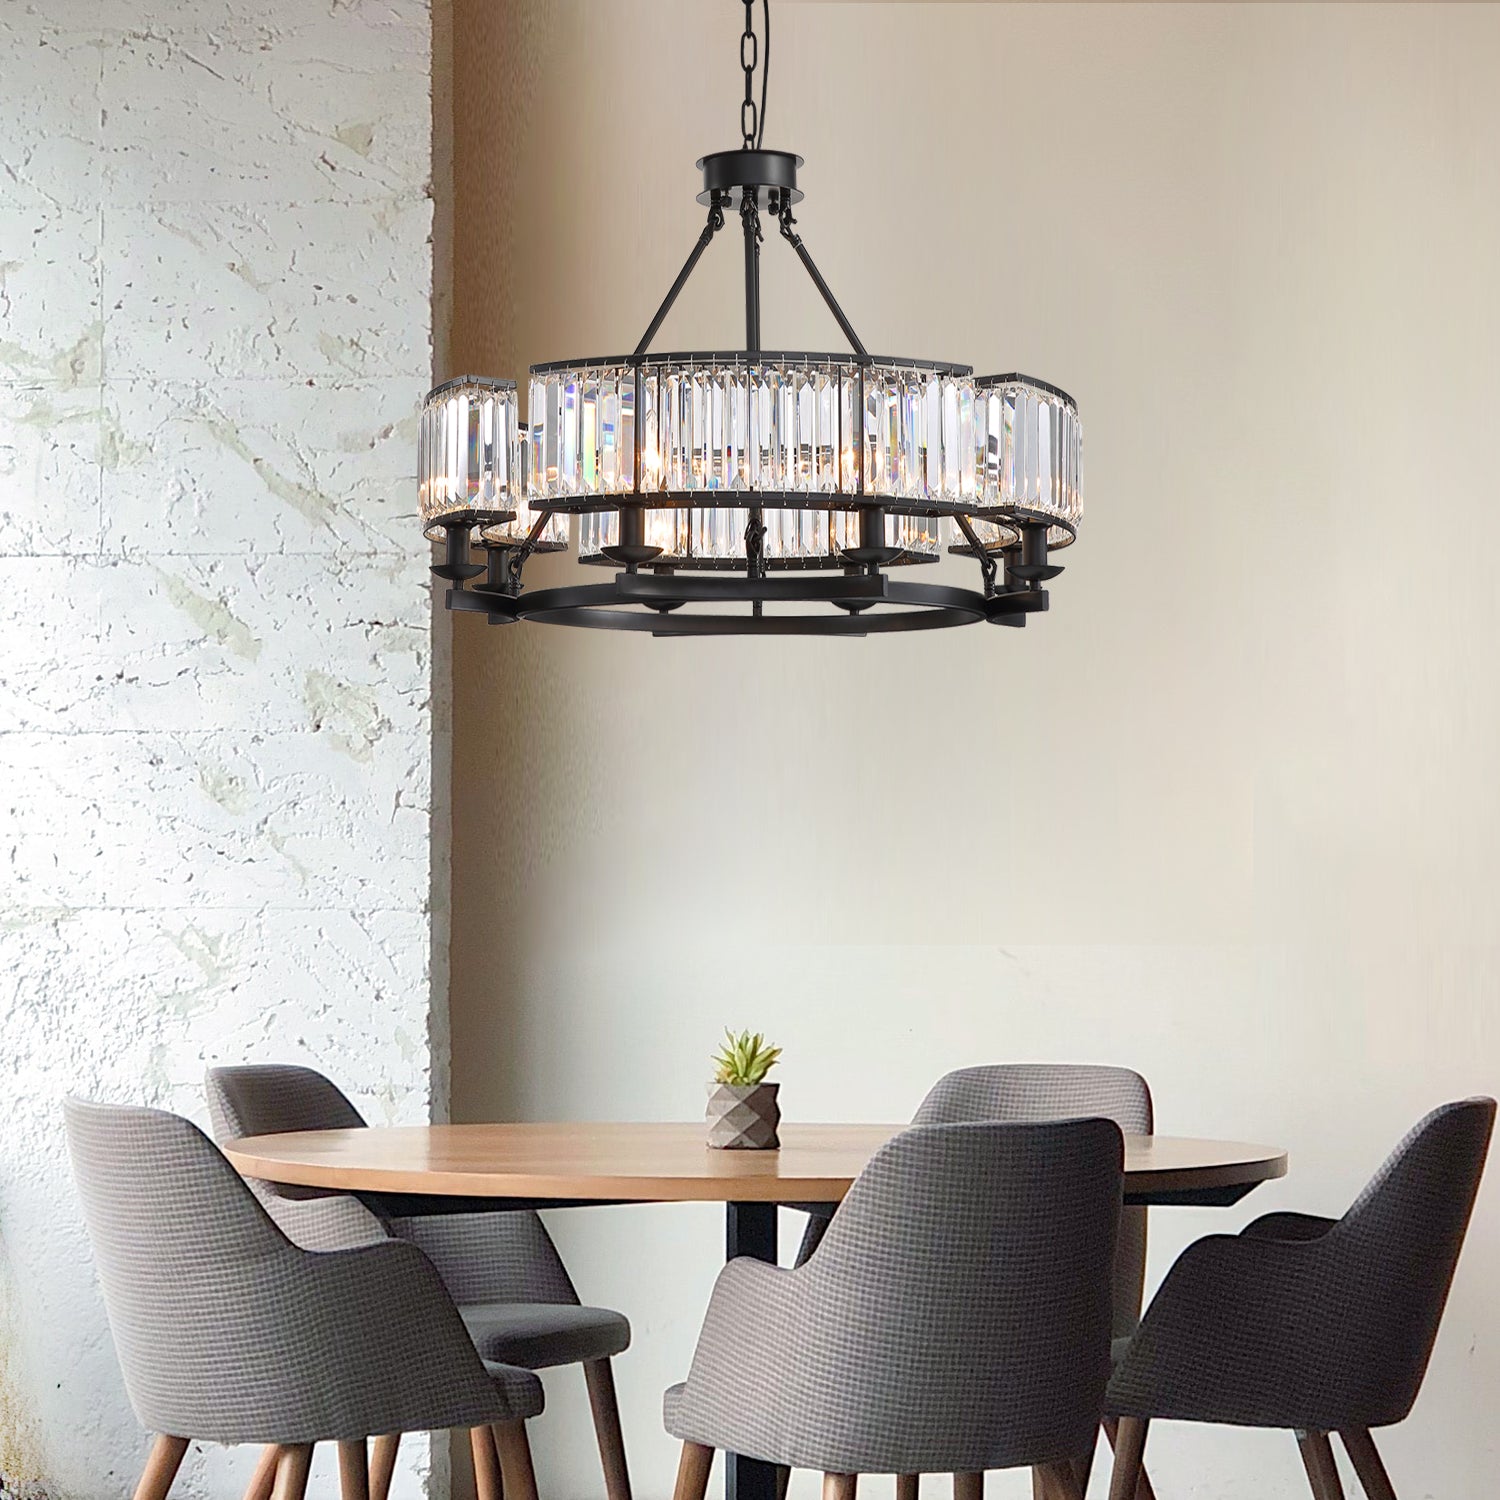 Contemporary Round Island Crystal Chandelier - Rustic Vintage Industrial design - Dining room